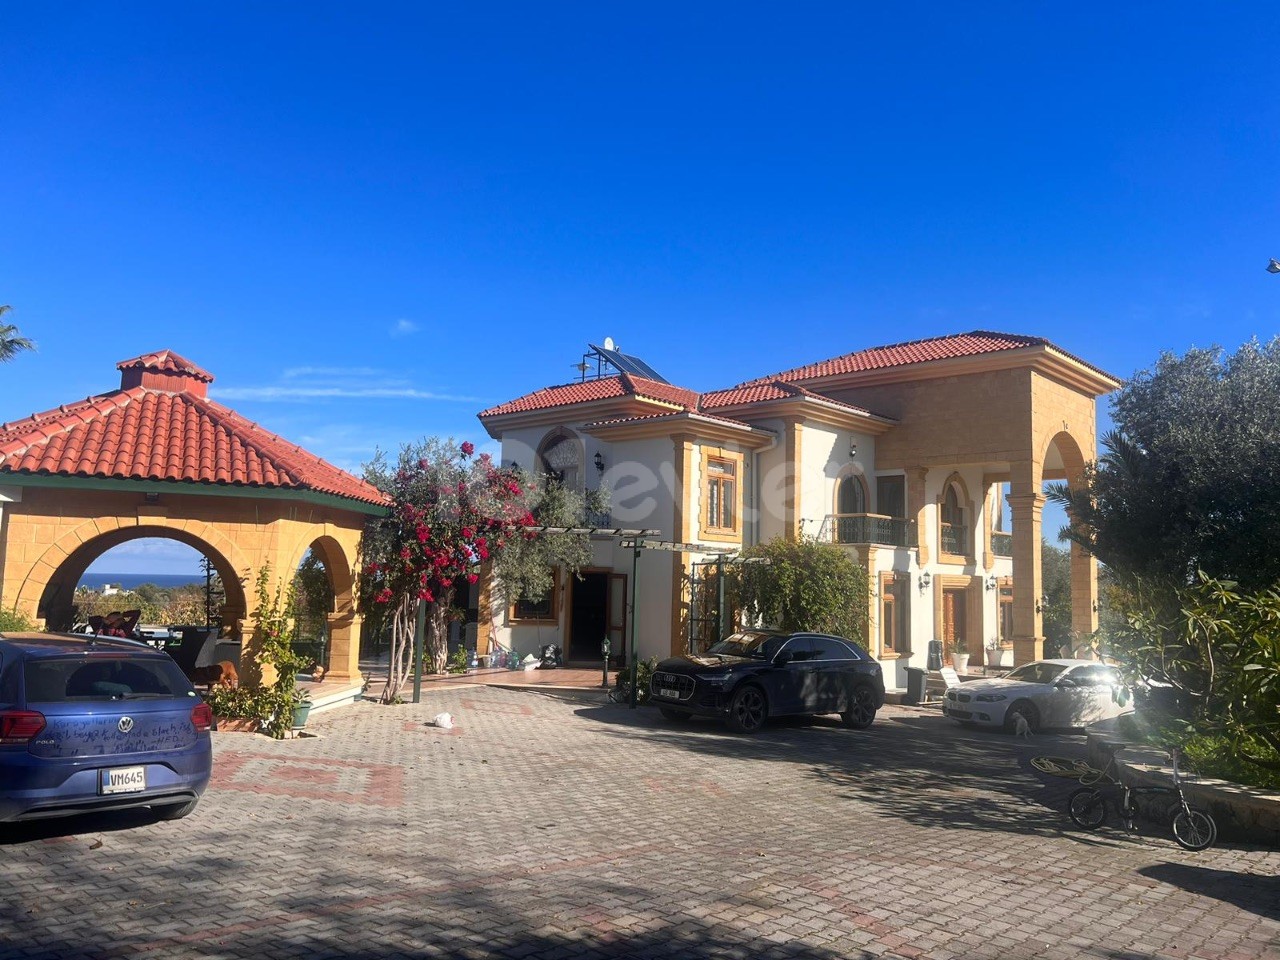 Villa for Sale on 6.5 Decares in Kyrenia/Edremit